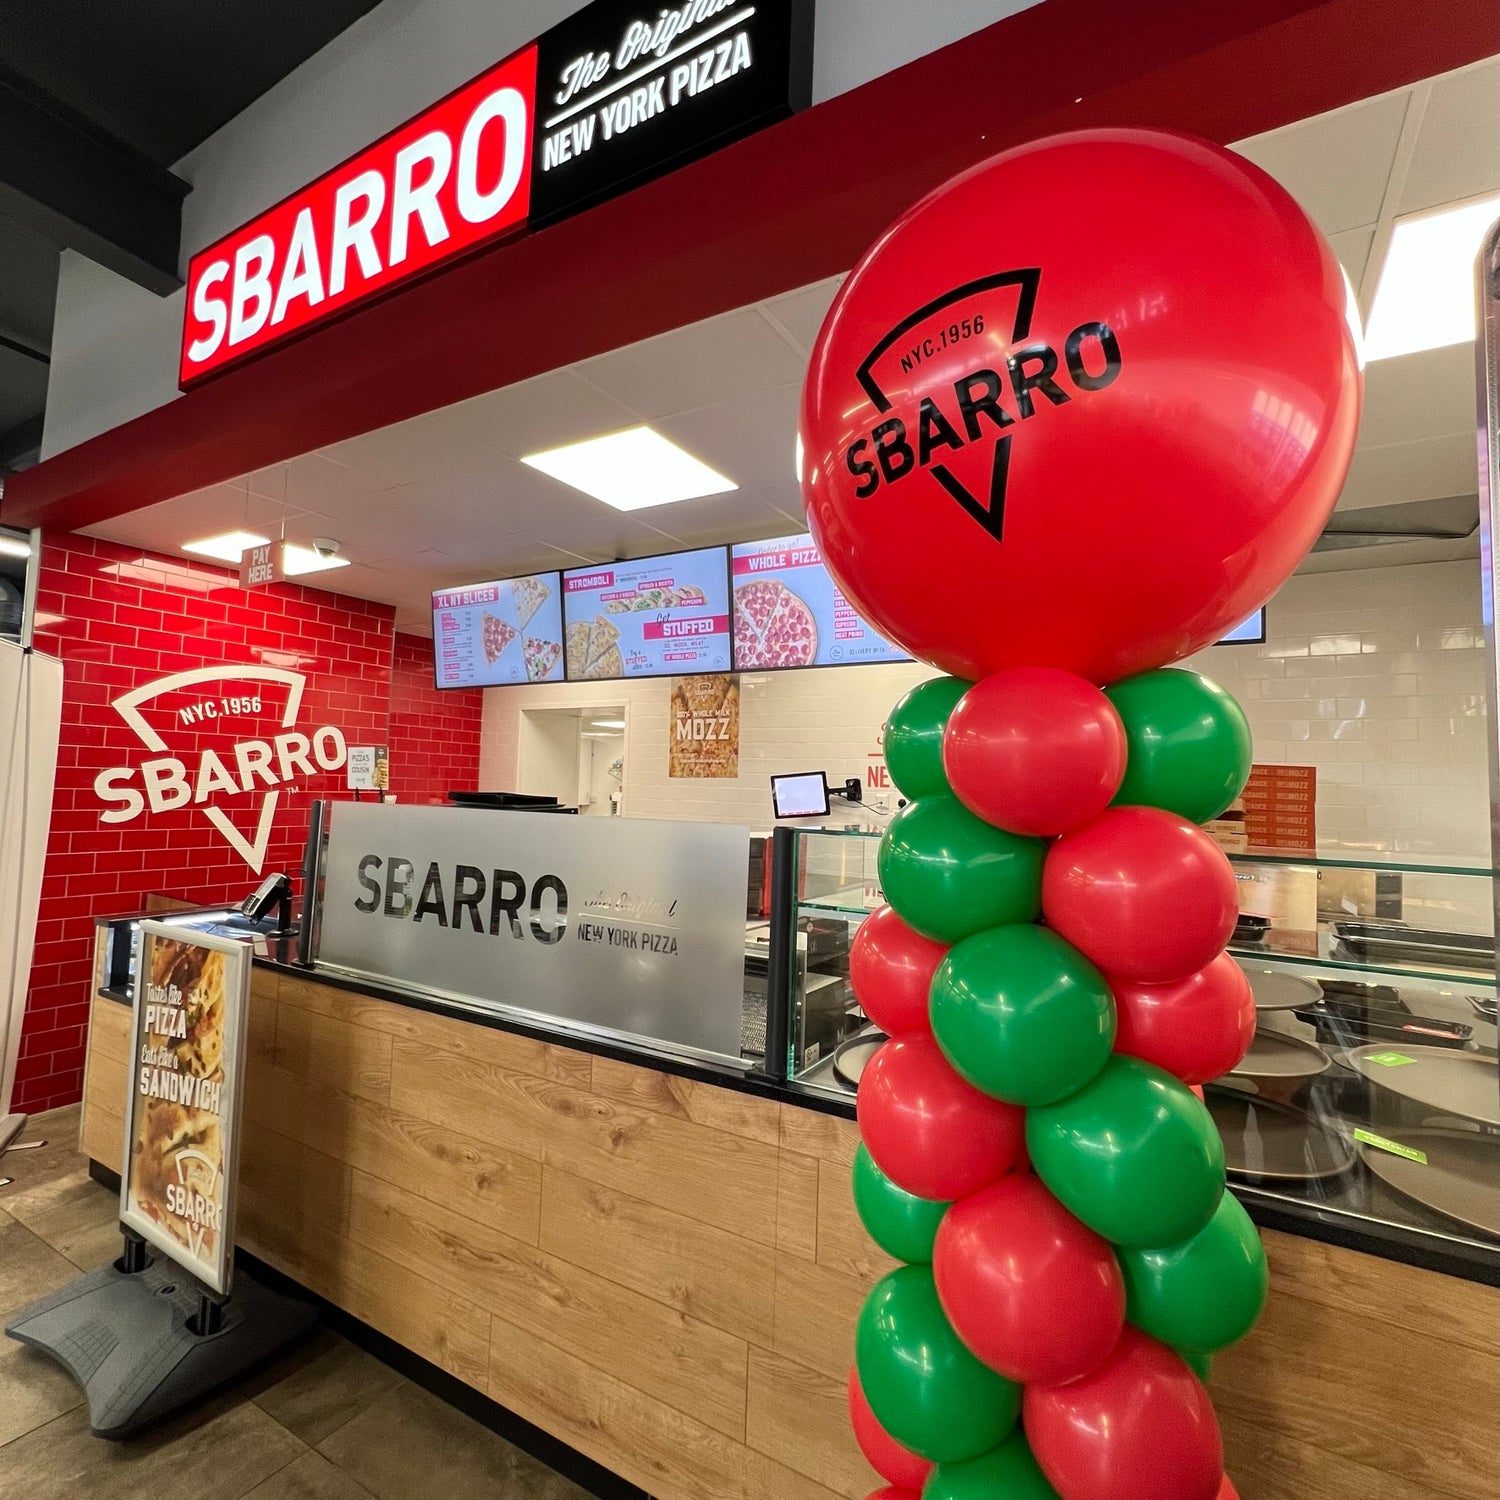 Sbarro branded balloons